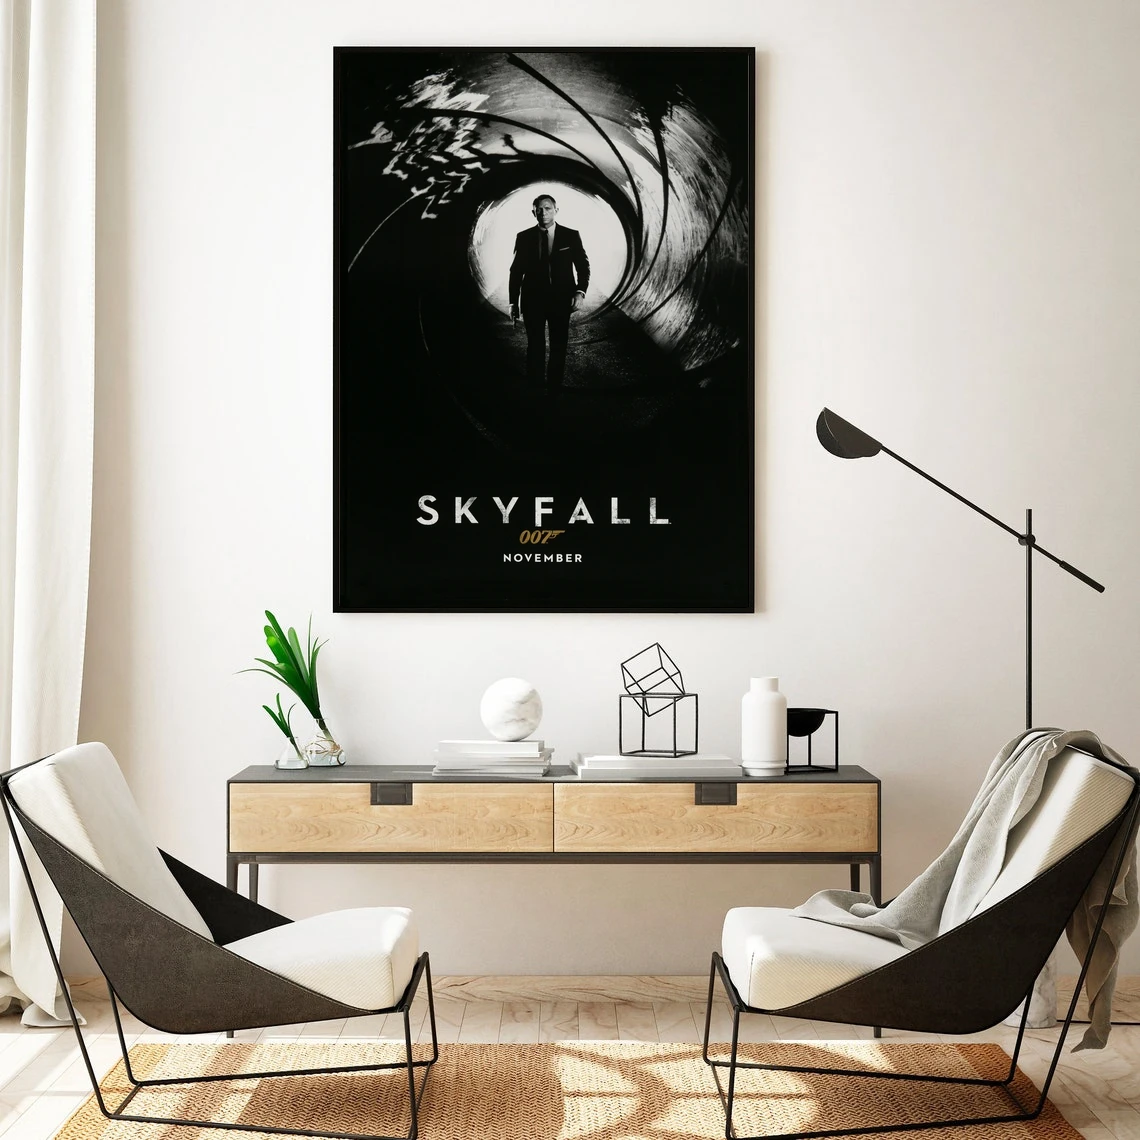 2012 James Bond Poster Reprint/Home Decor/Wall Decor/Wall Art Skyfall 